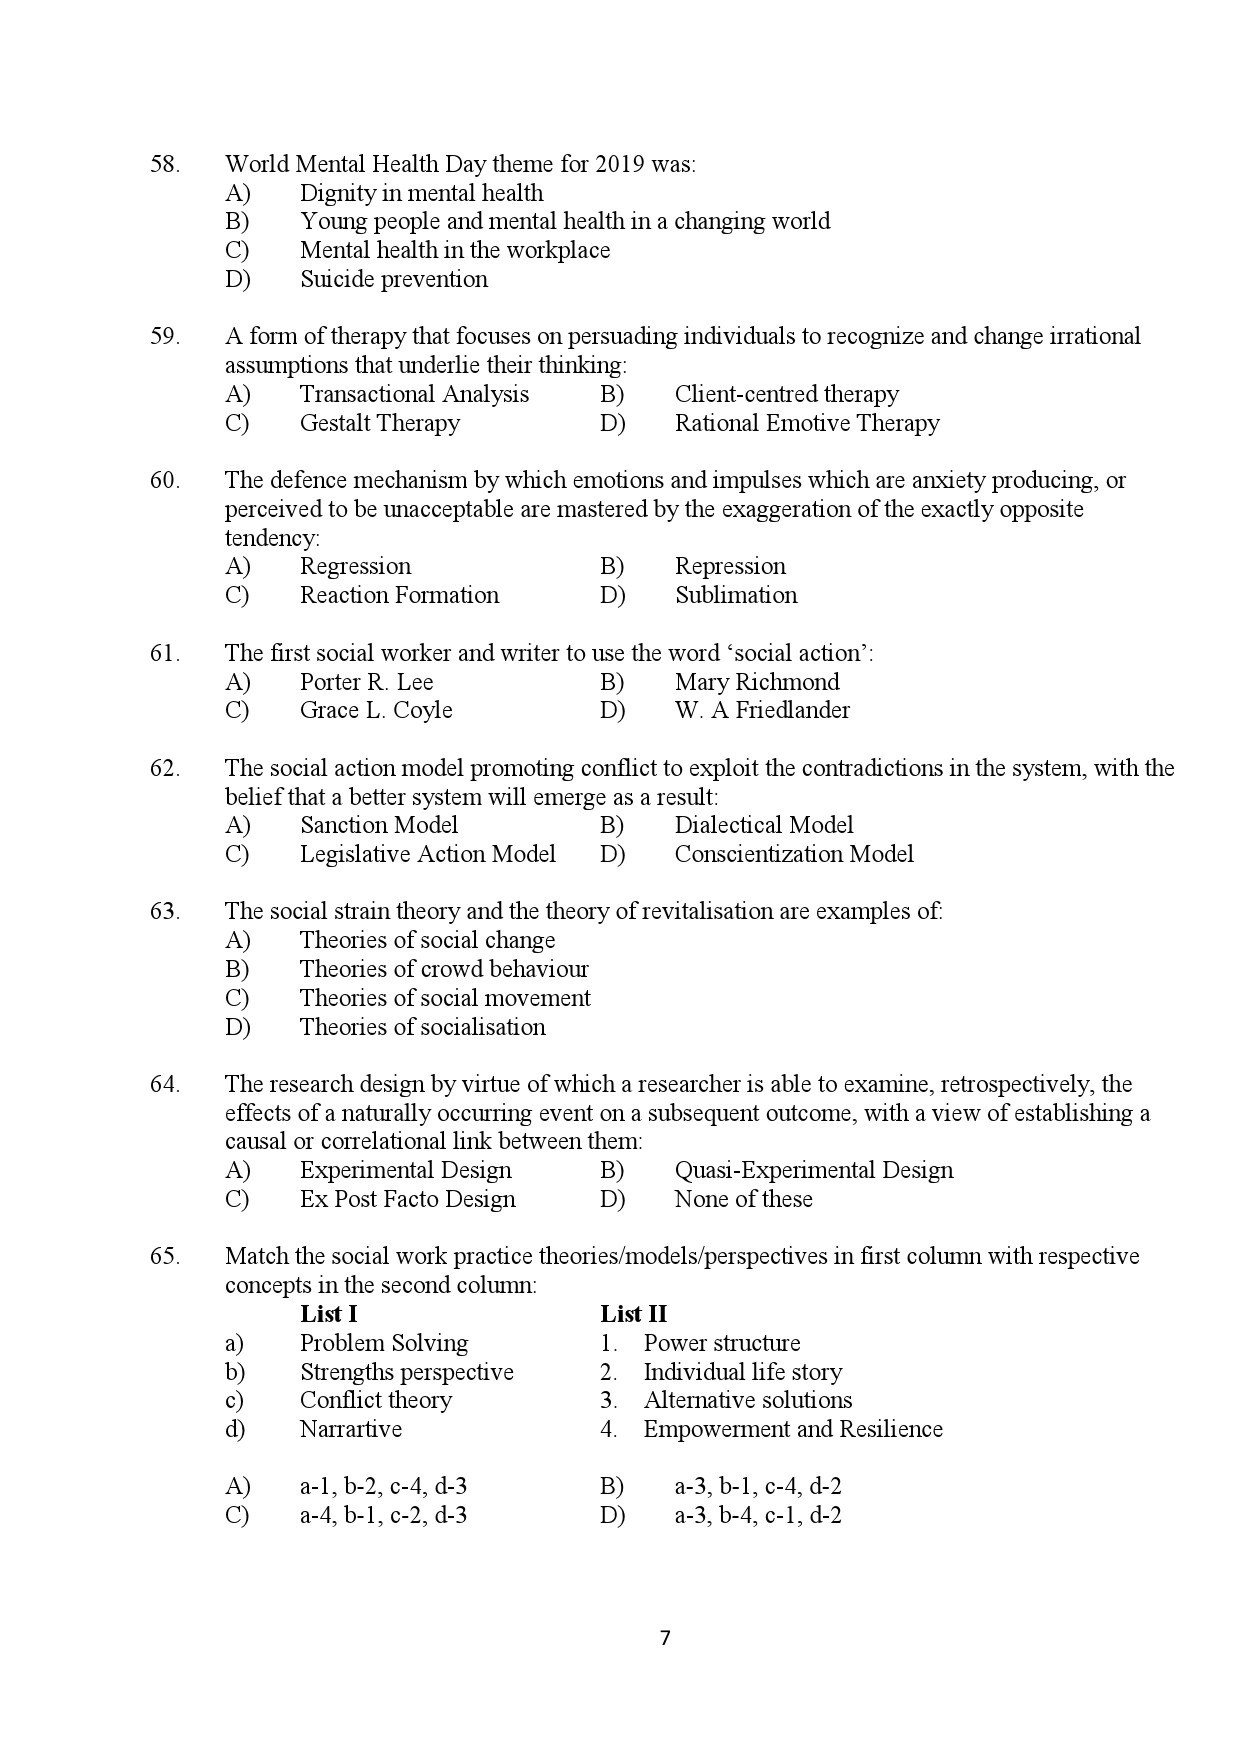 Kerala SET Social Work Exam Question Paper February 2020 7